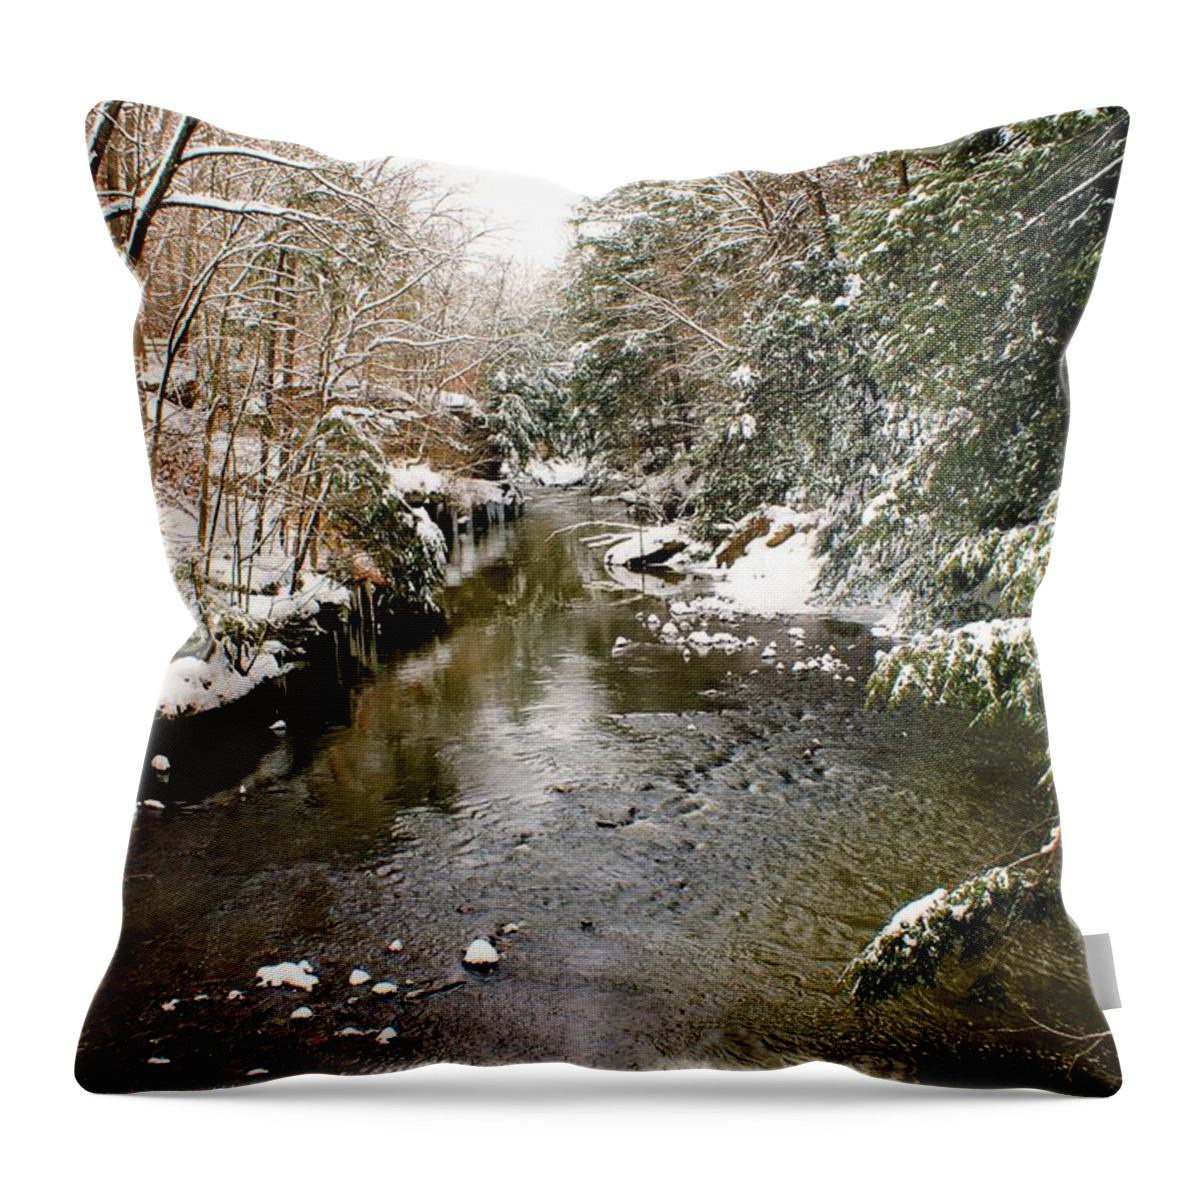 Winter Landscape Throw Pillow featuring the photograph Winter Landscape by Michelle Joseph-Long